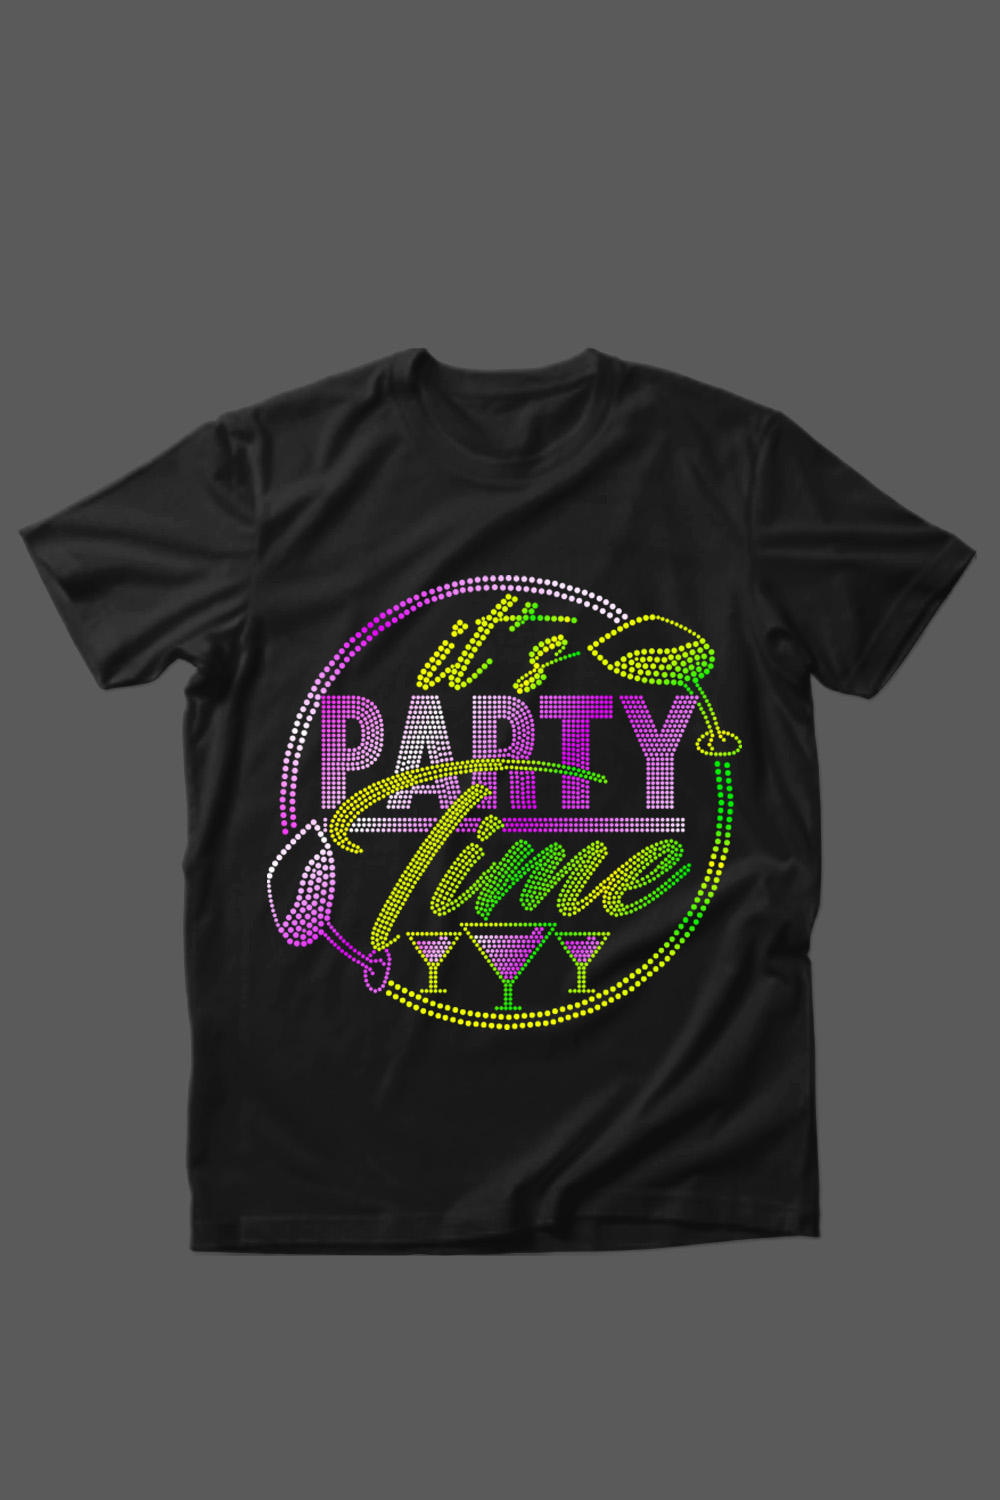 It’s Party Time Rhinestone Templates Design pinterest image.